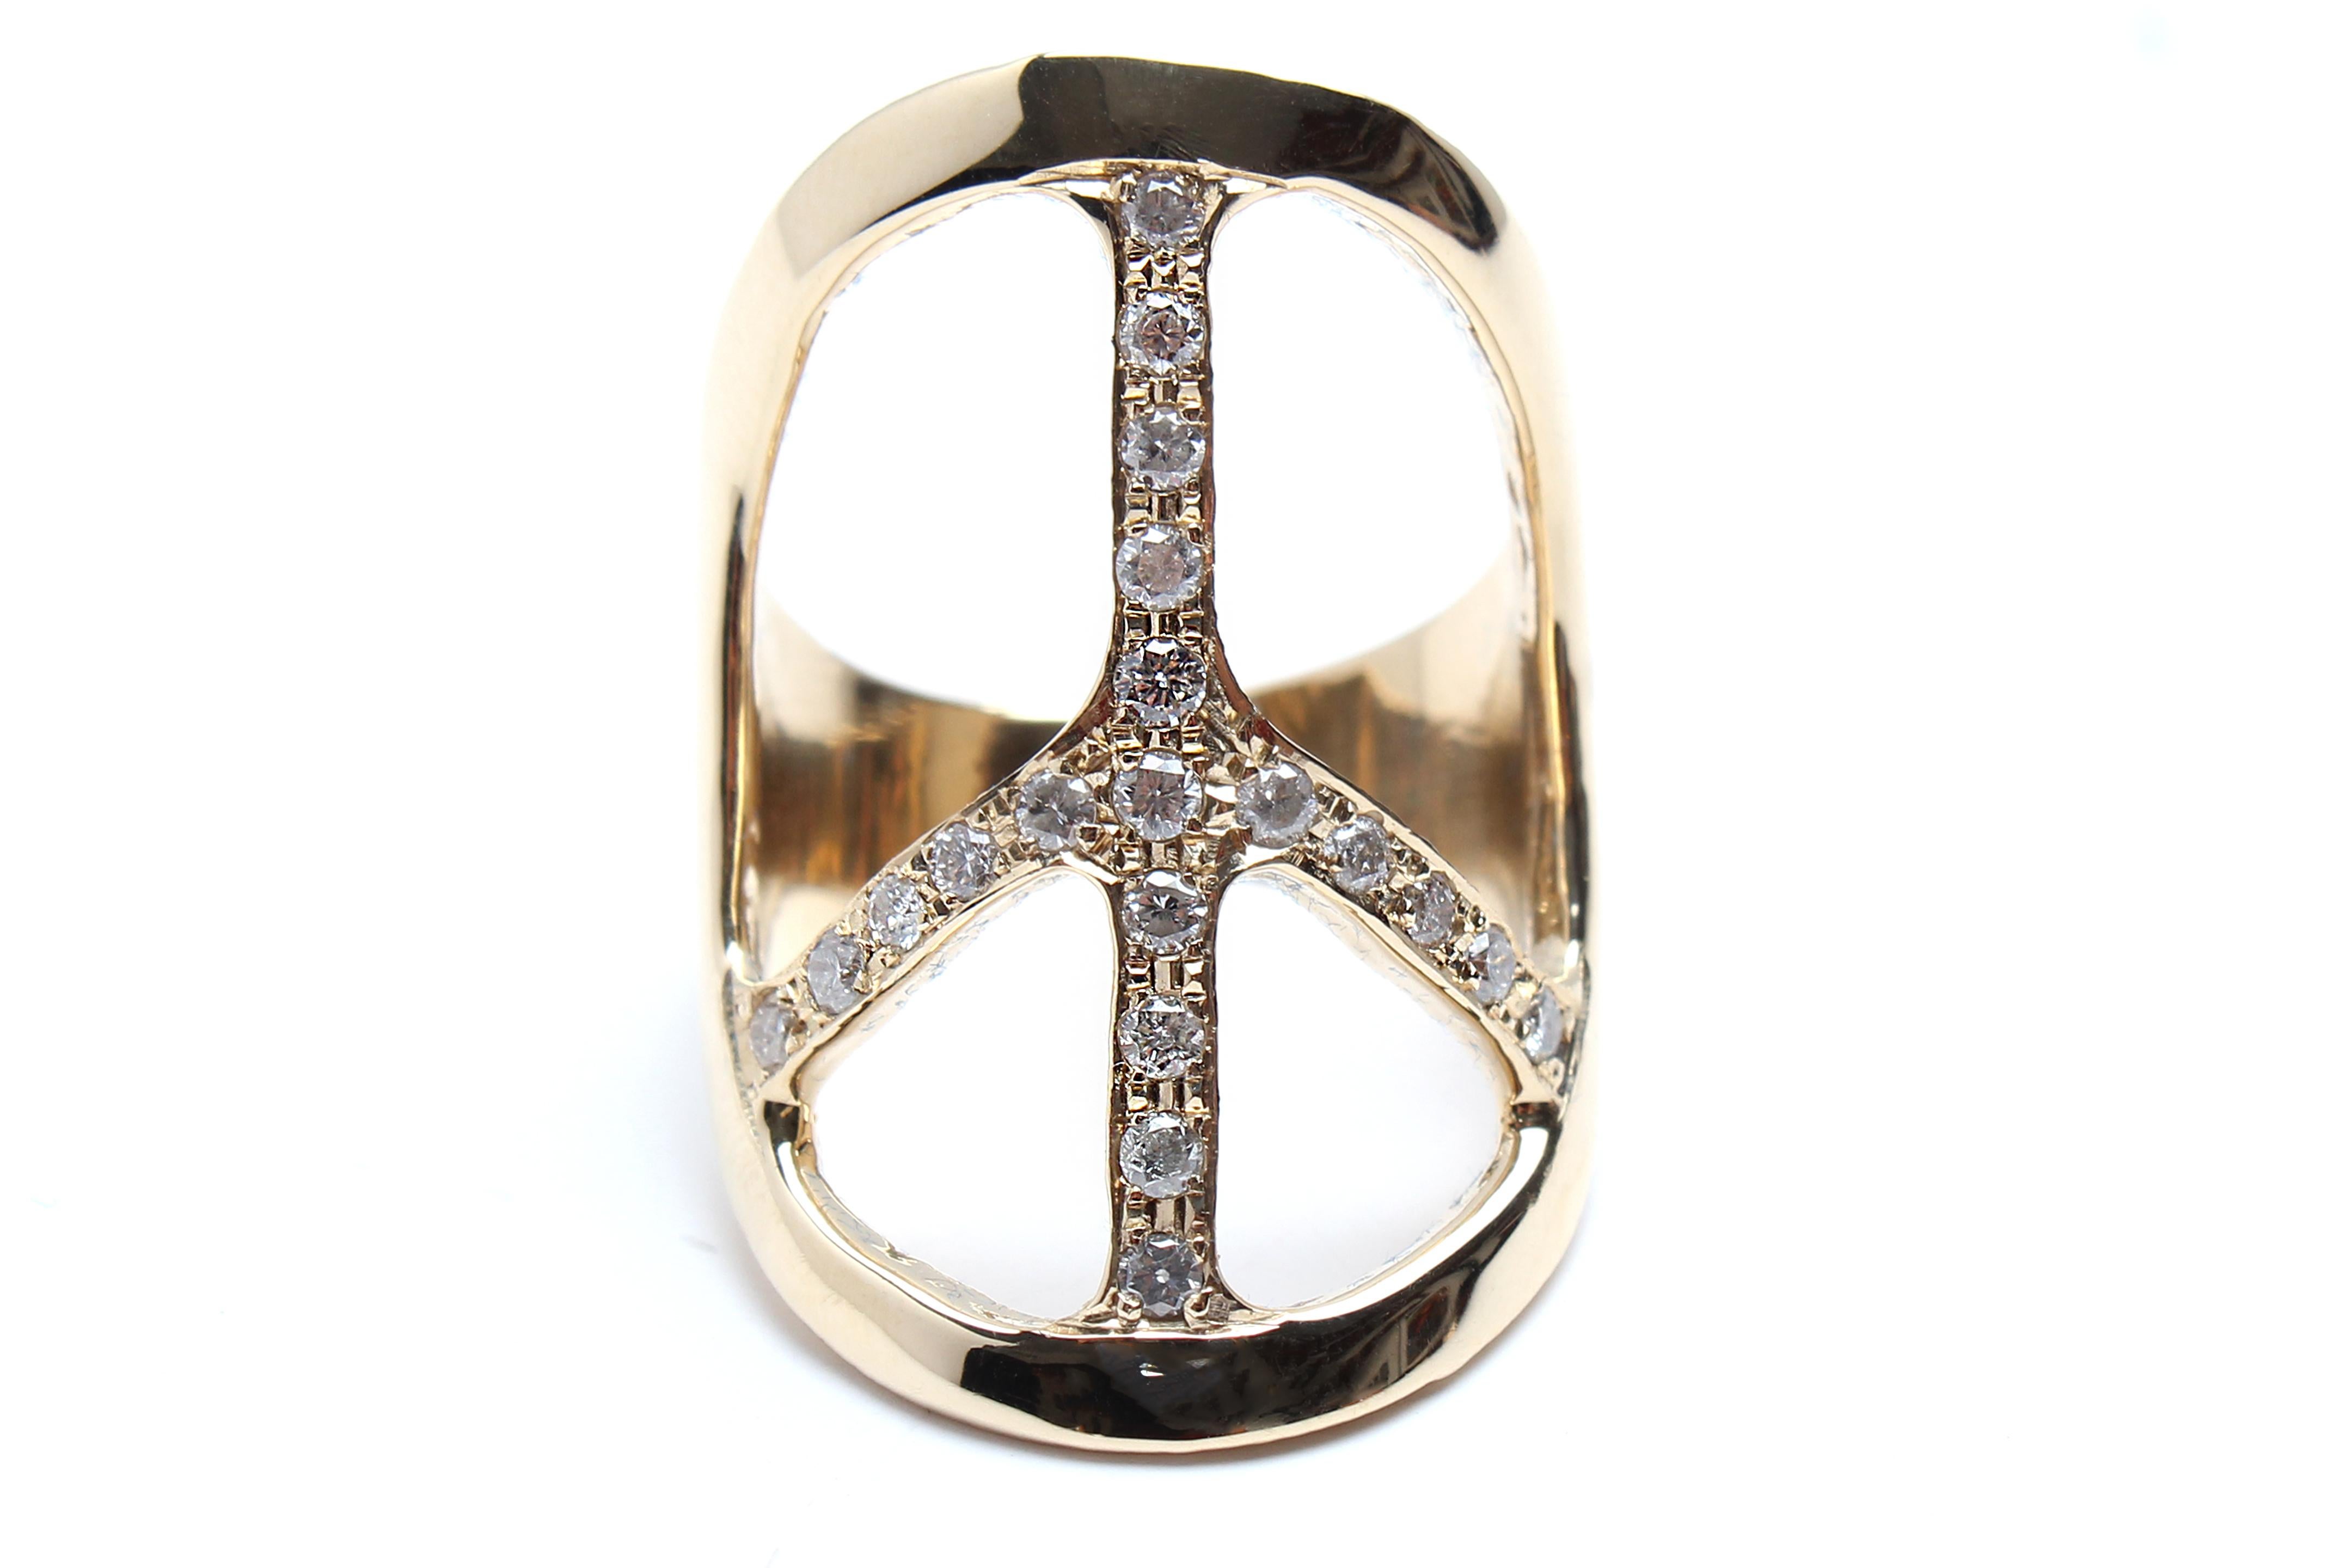 Clarissa Bronfman Signature Solid 14 Karat Gold Diamond Peace Ring